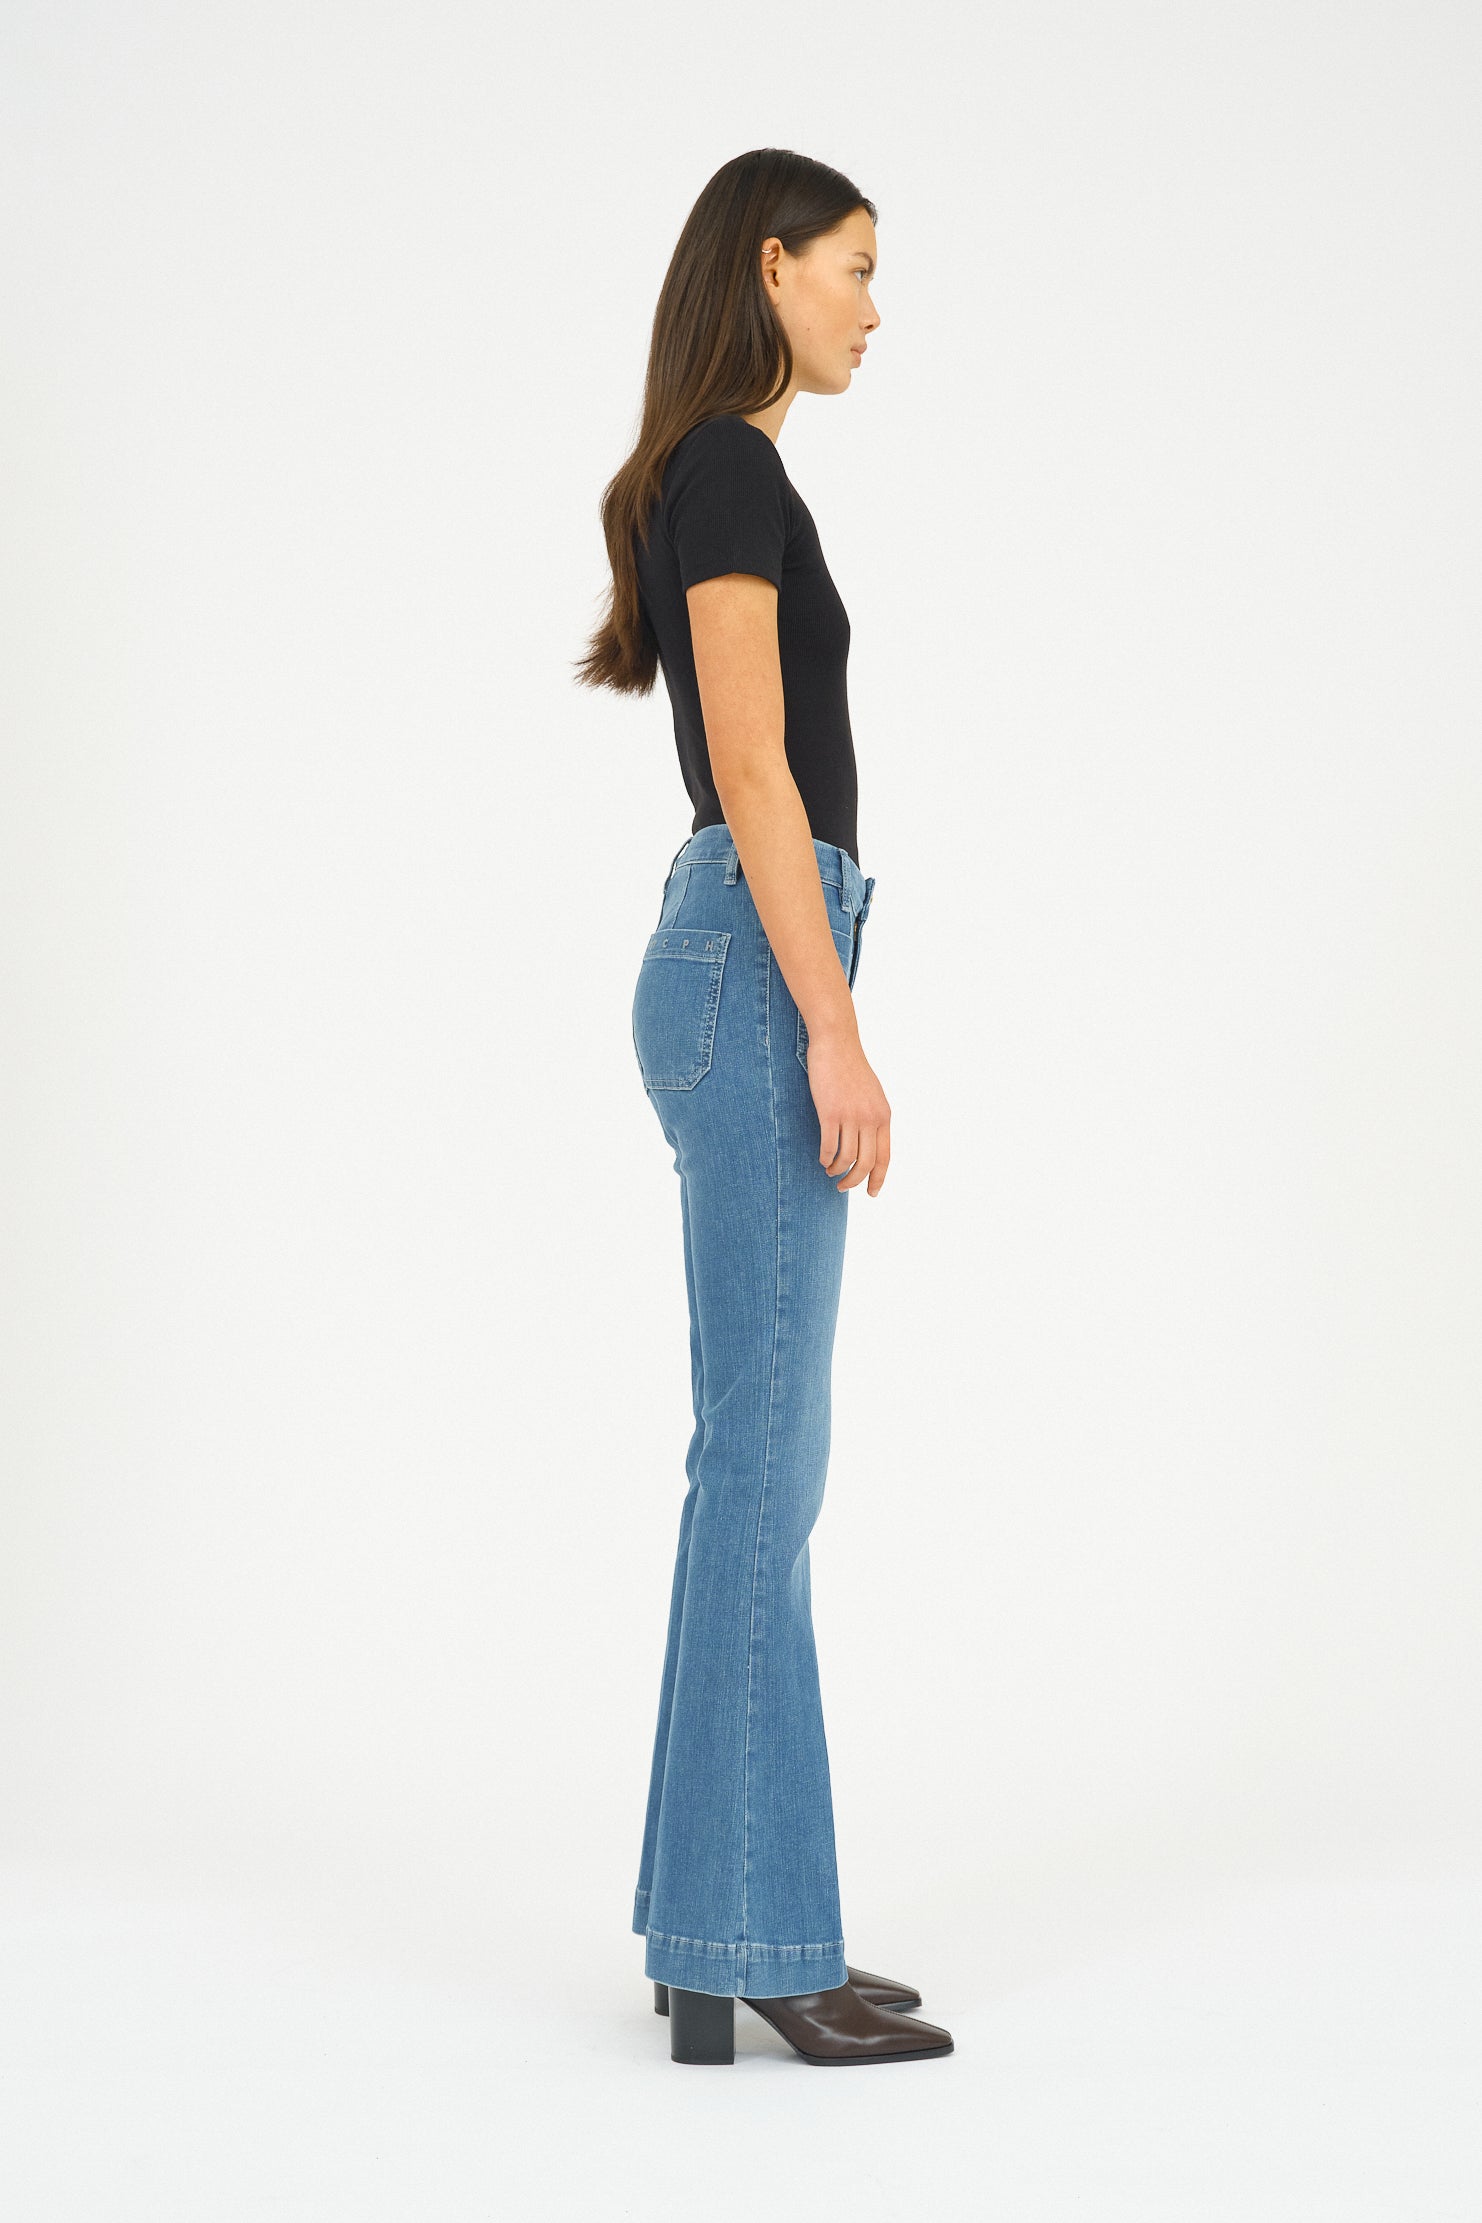 IVY Copenhagen IVY-Ann Charlotte Jeans Wash Bright Tenerife Jeans & Pants 51 Denim Blue